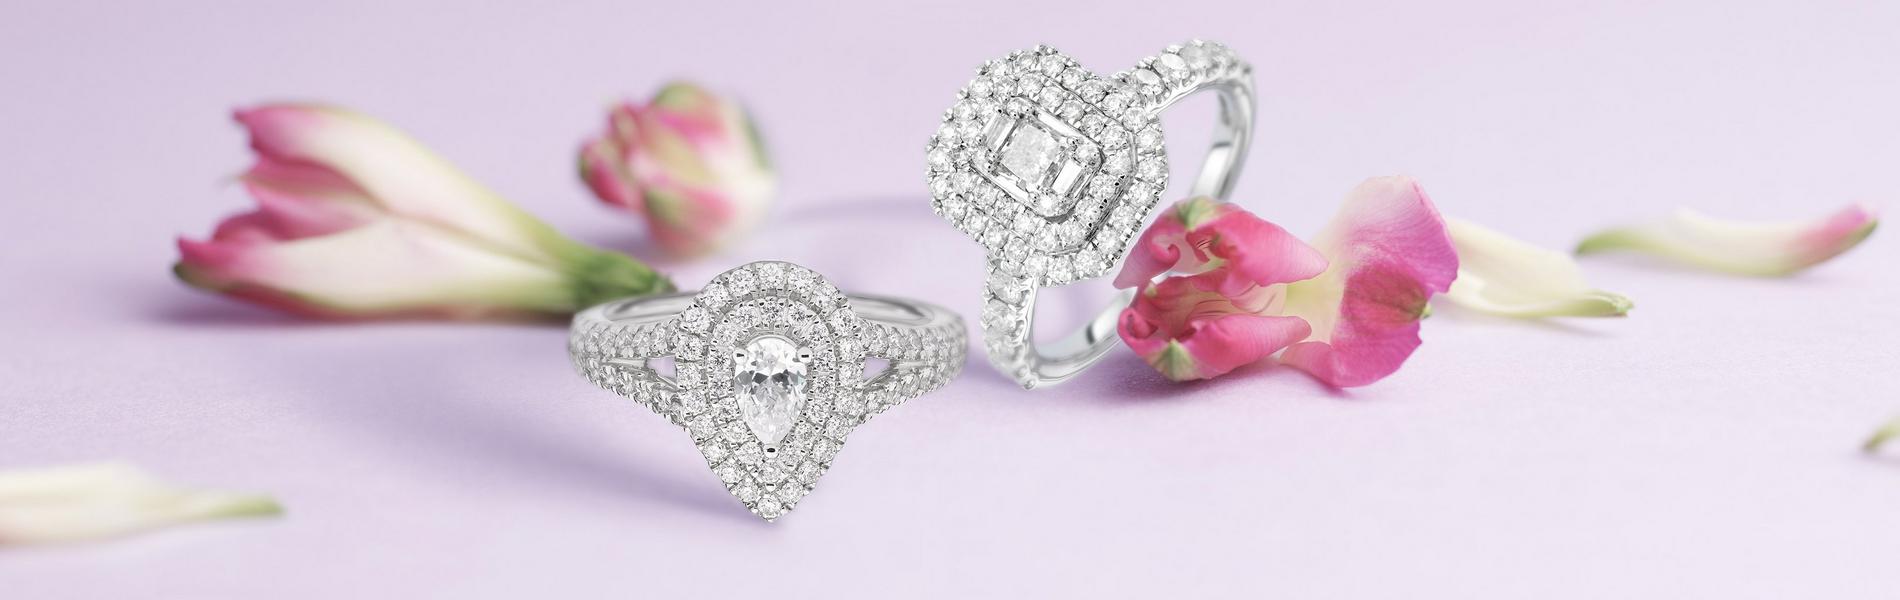 engagement rings floral display